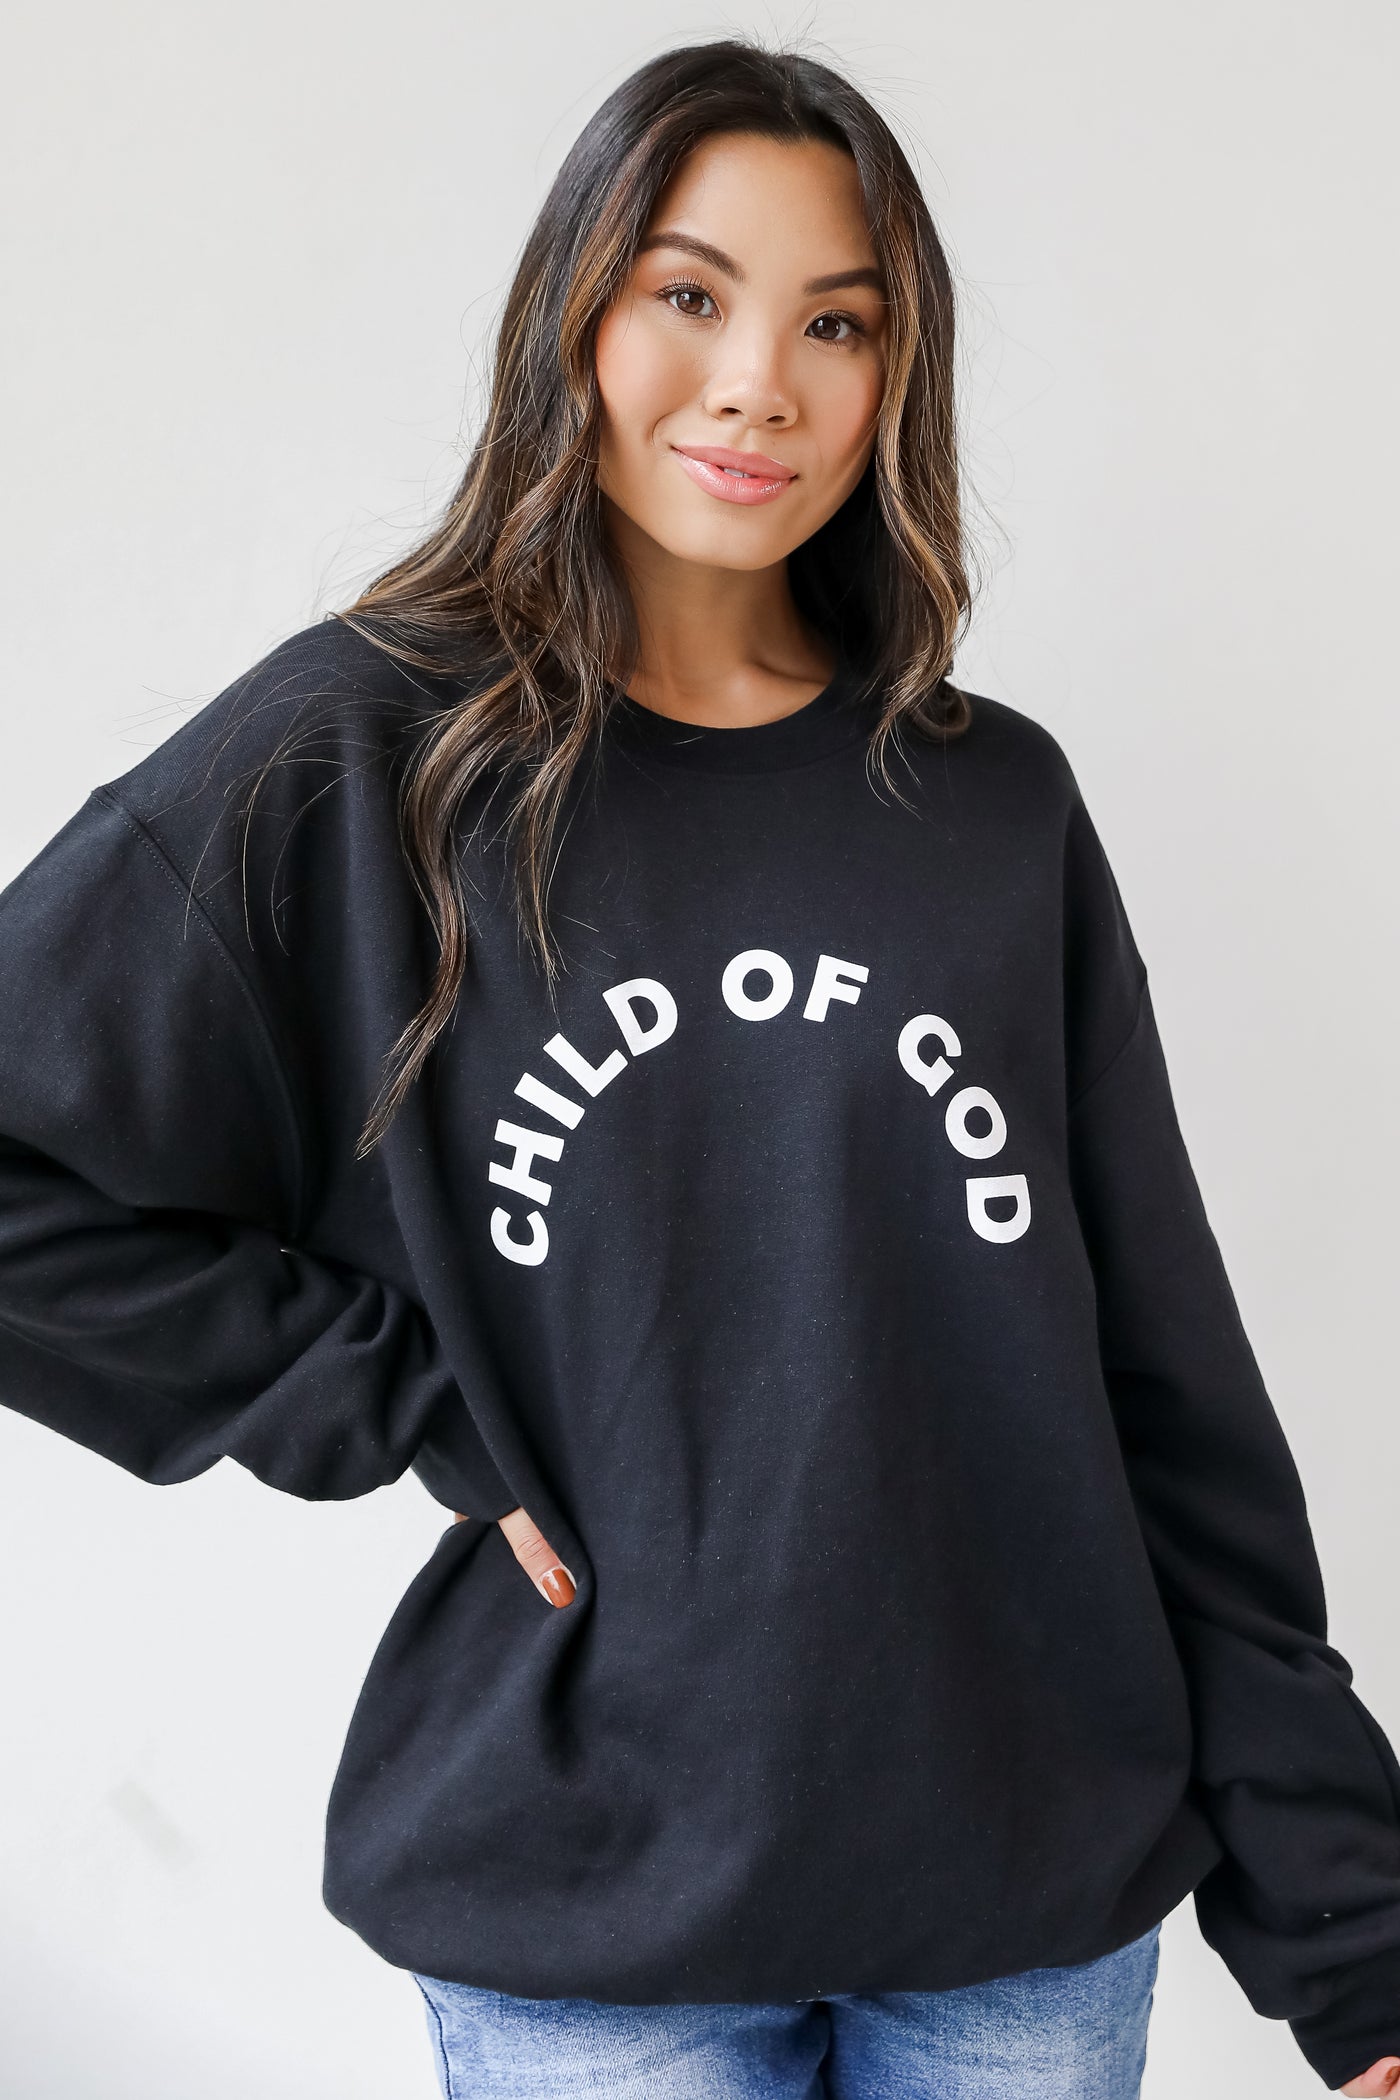 Child of God Sweatshirt, Graphic Christian Sweatshirt, Oversized, Comfy, Trendy